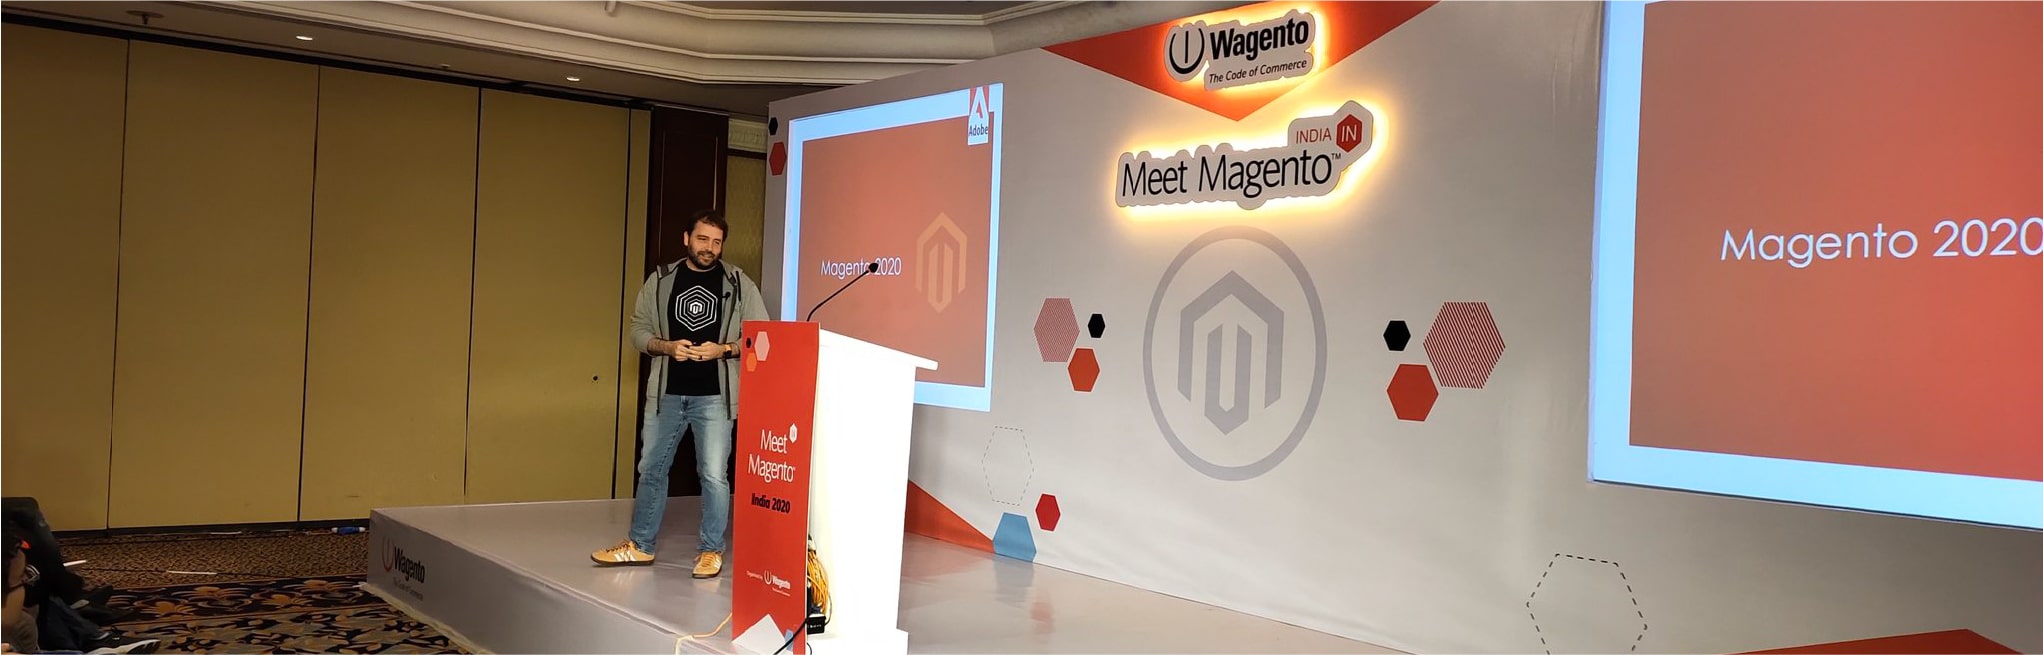 Meet-Magento-India-2020-1